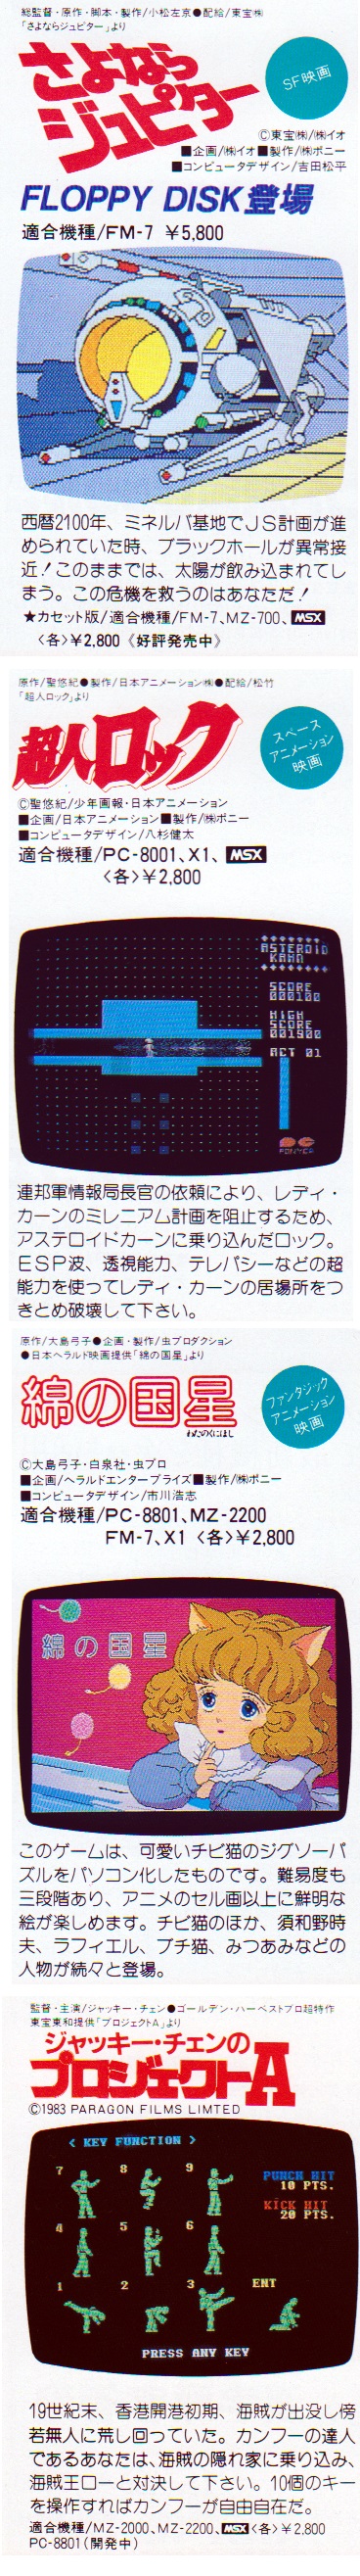 ASCII1984(06)scan09ポニカゲームW368.jpg